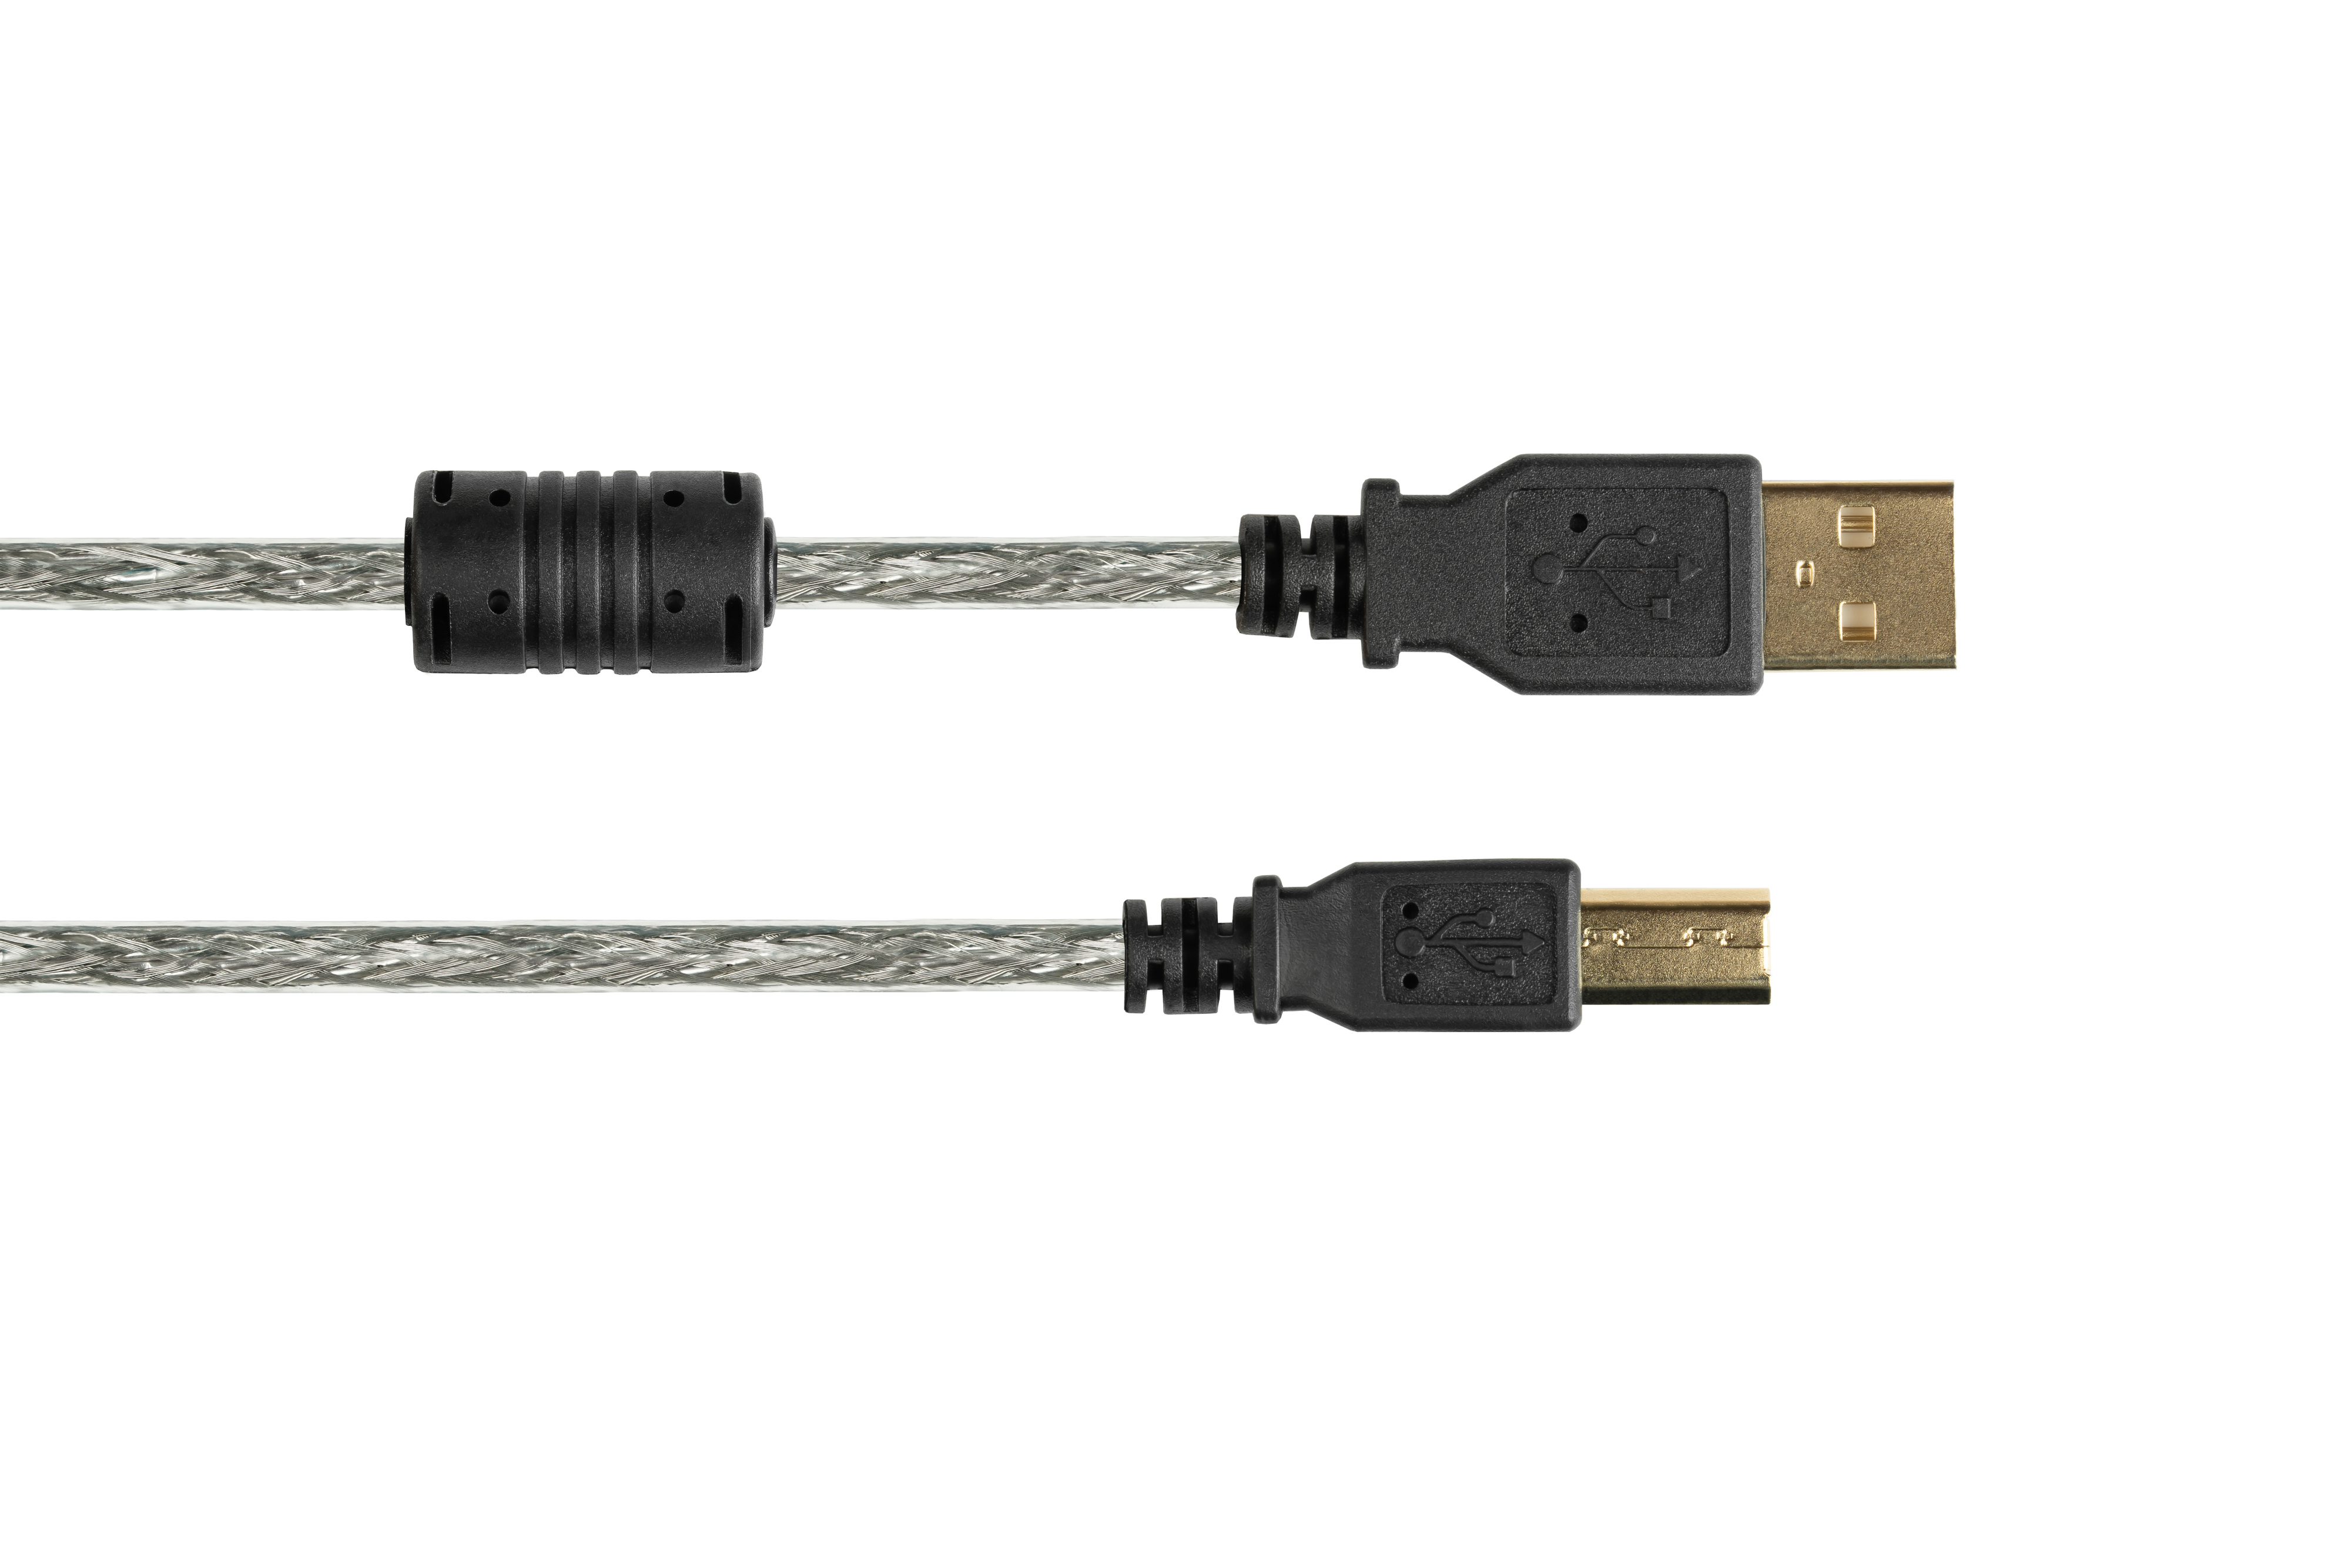 GOOD CONNECTIONS USB 2.0 B, A Anschlusskabel Quality Goldkontakten, mit Stecker High Ferritkern und transparent an Stecker